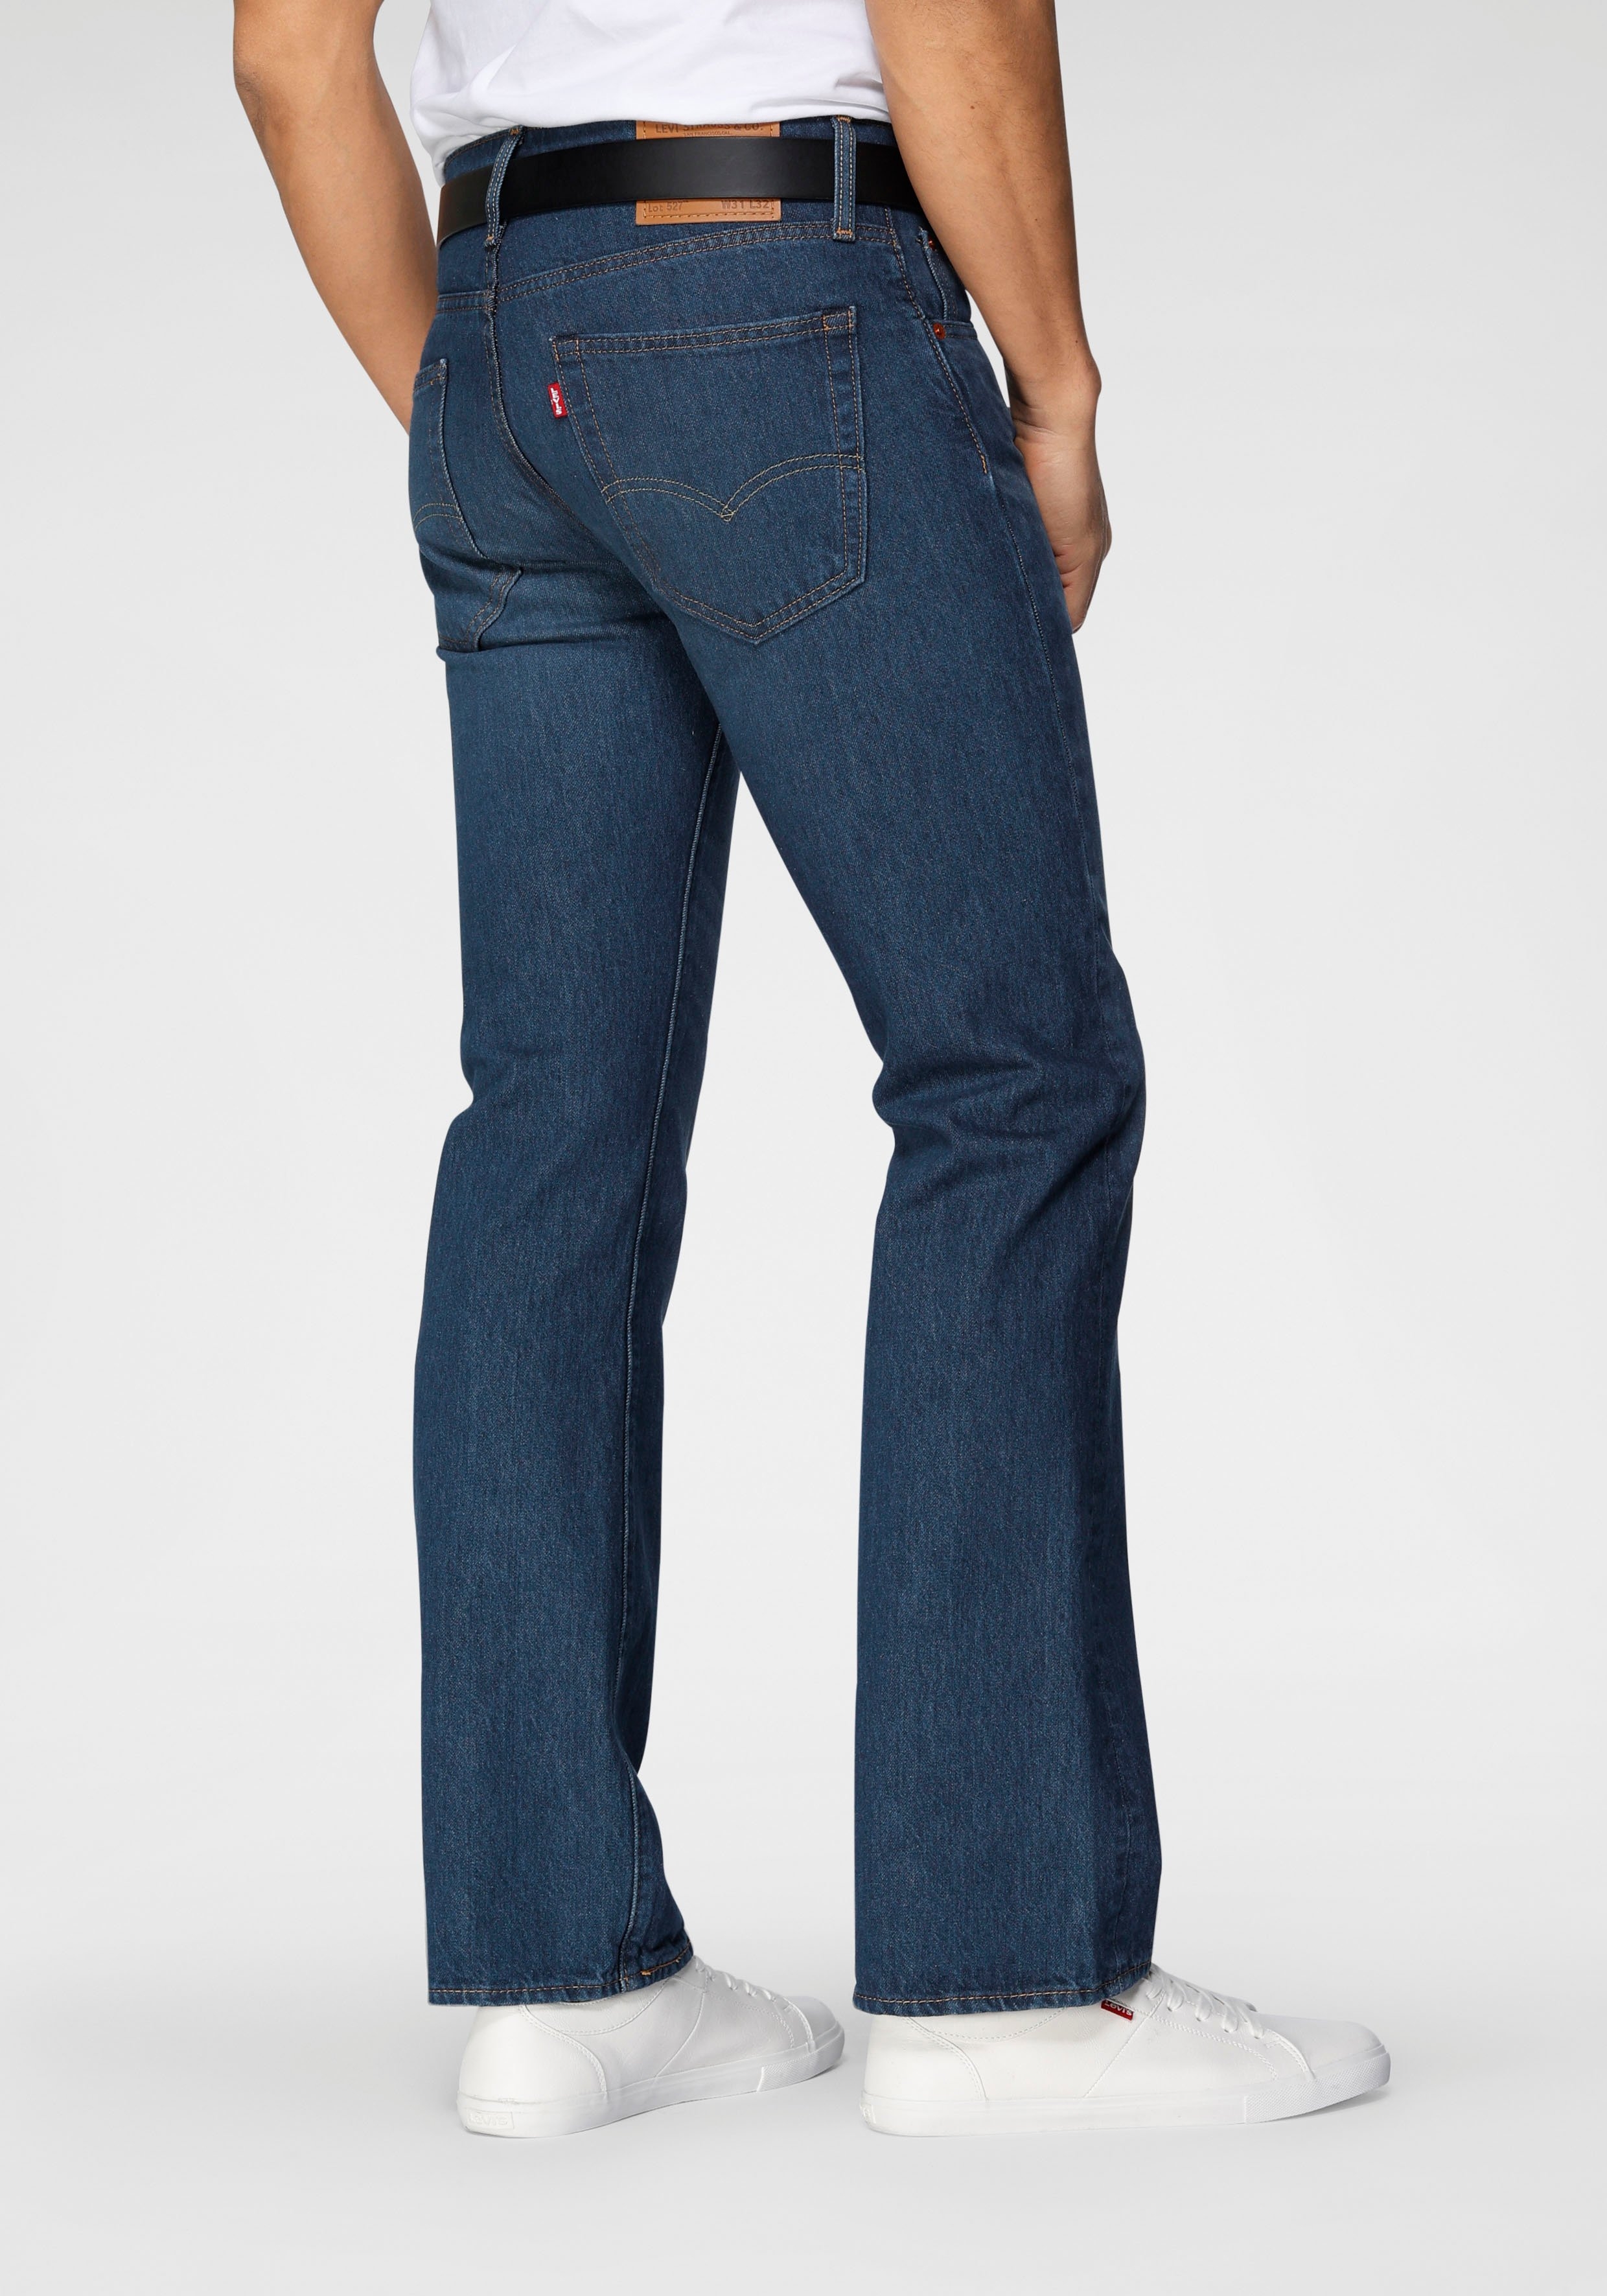 Auroch Huh Simuleren Levi's® Bootcut jeans 527™ online bestellen | OTTO